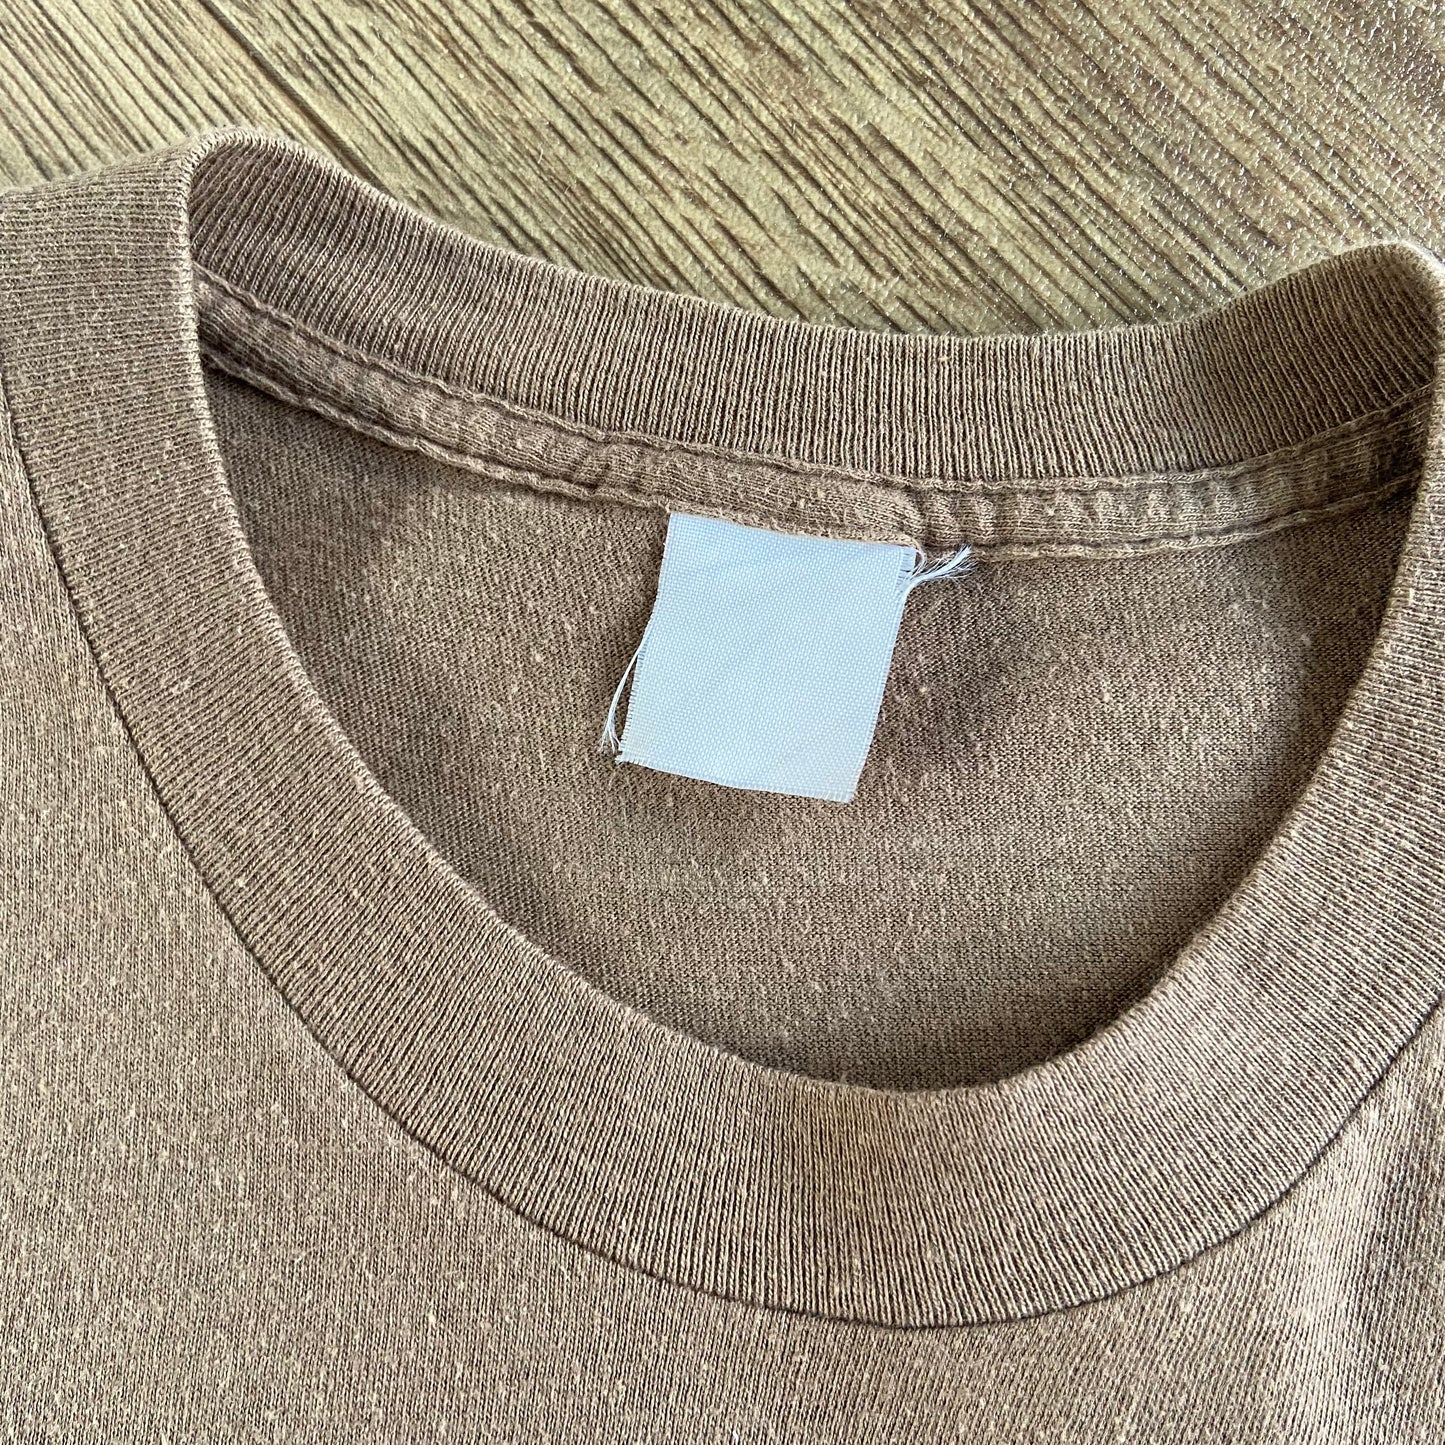 Stingray Reimagined “Barbican” T Shirt, Size M Tan